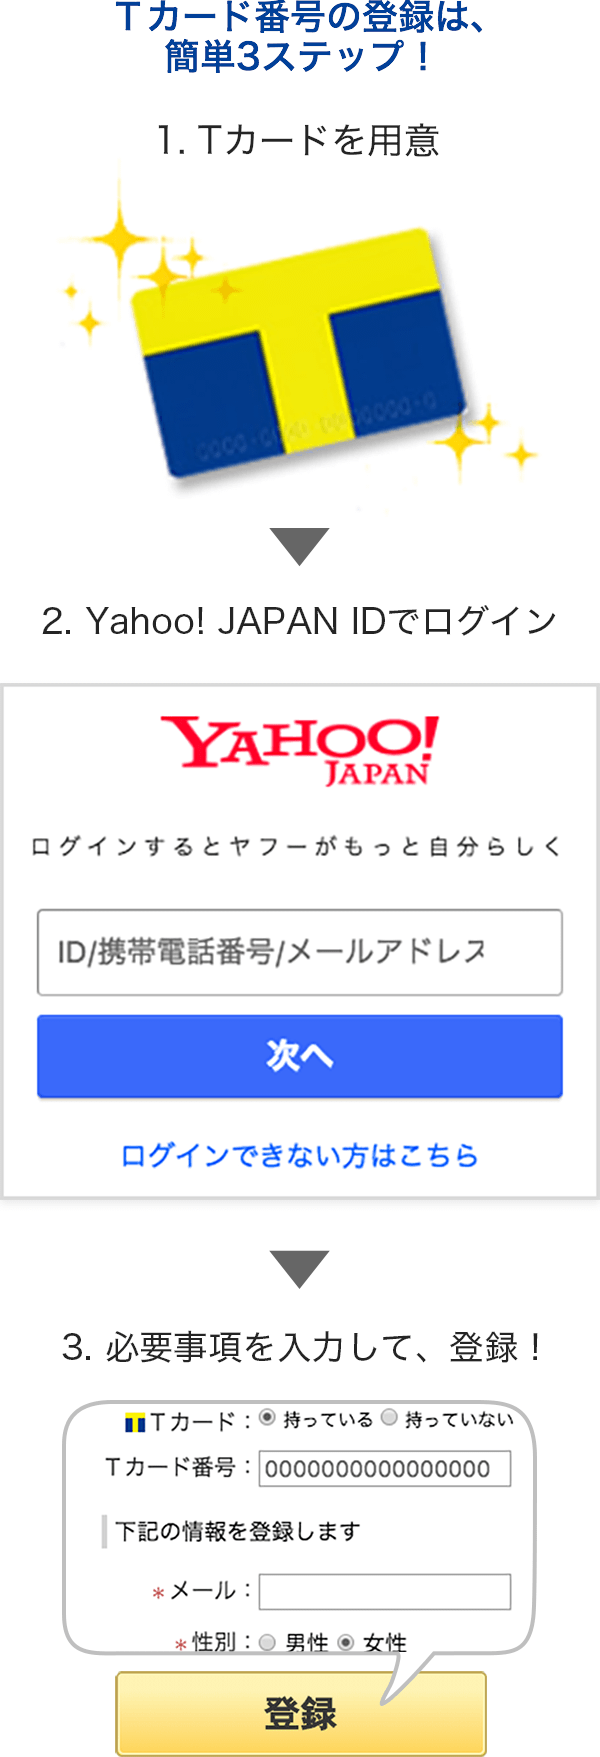 Yahoo Japan ご利用ガイド ｔカード番号を登録する